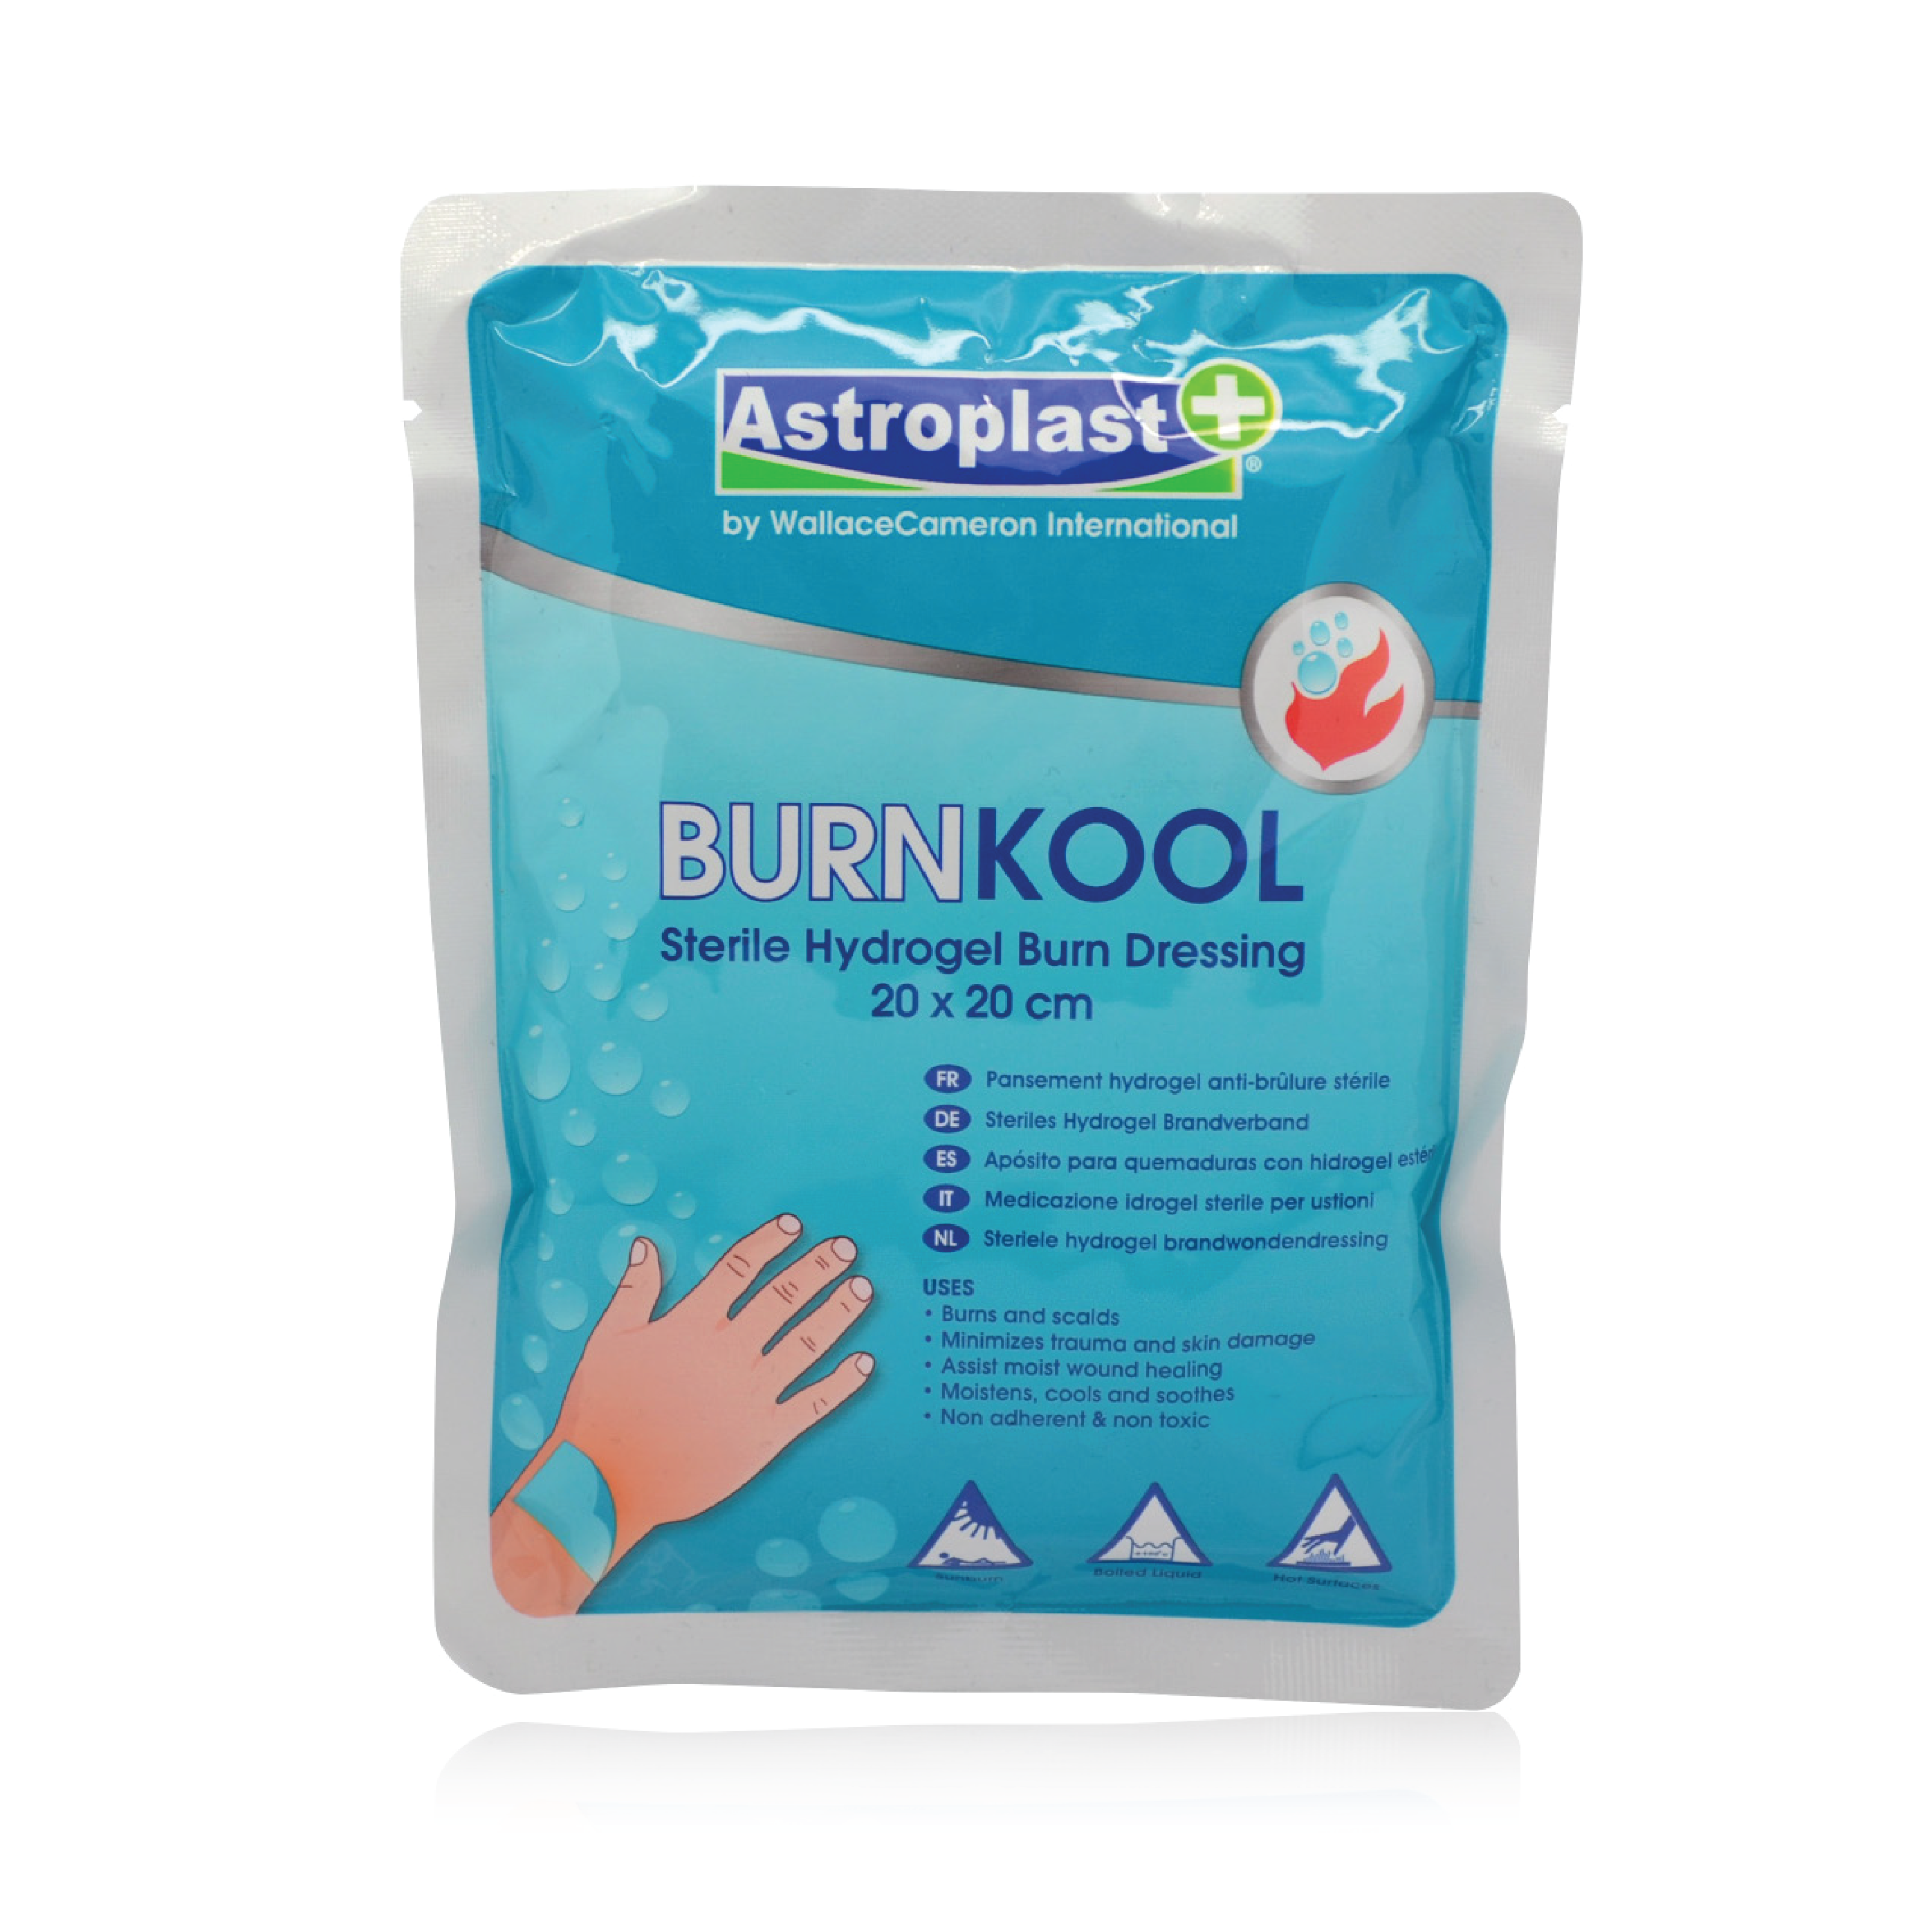 Astroplast Burn Kool Dressing - 20 x 20cm - Each